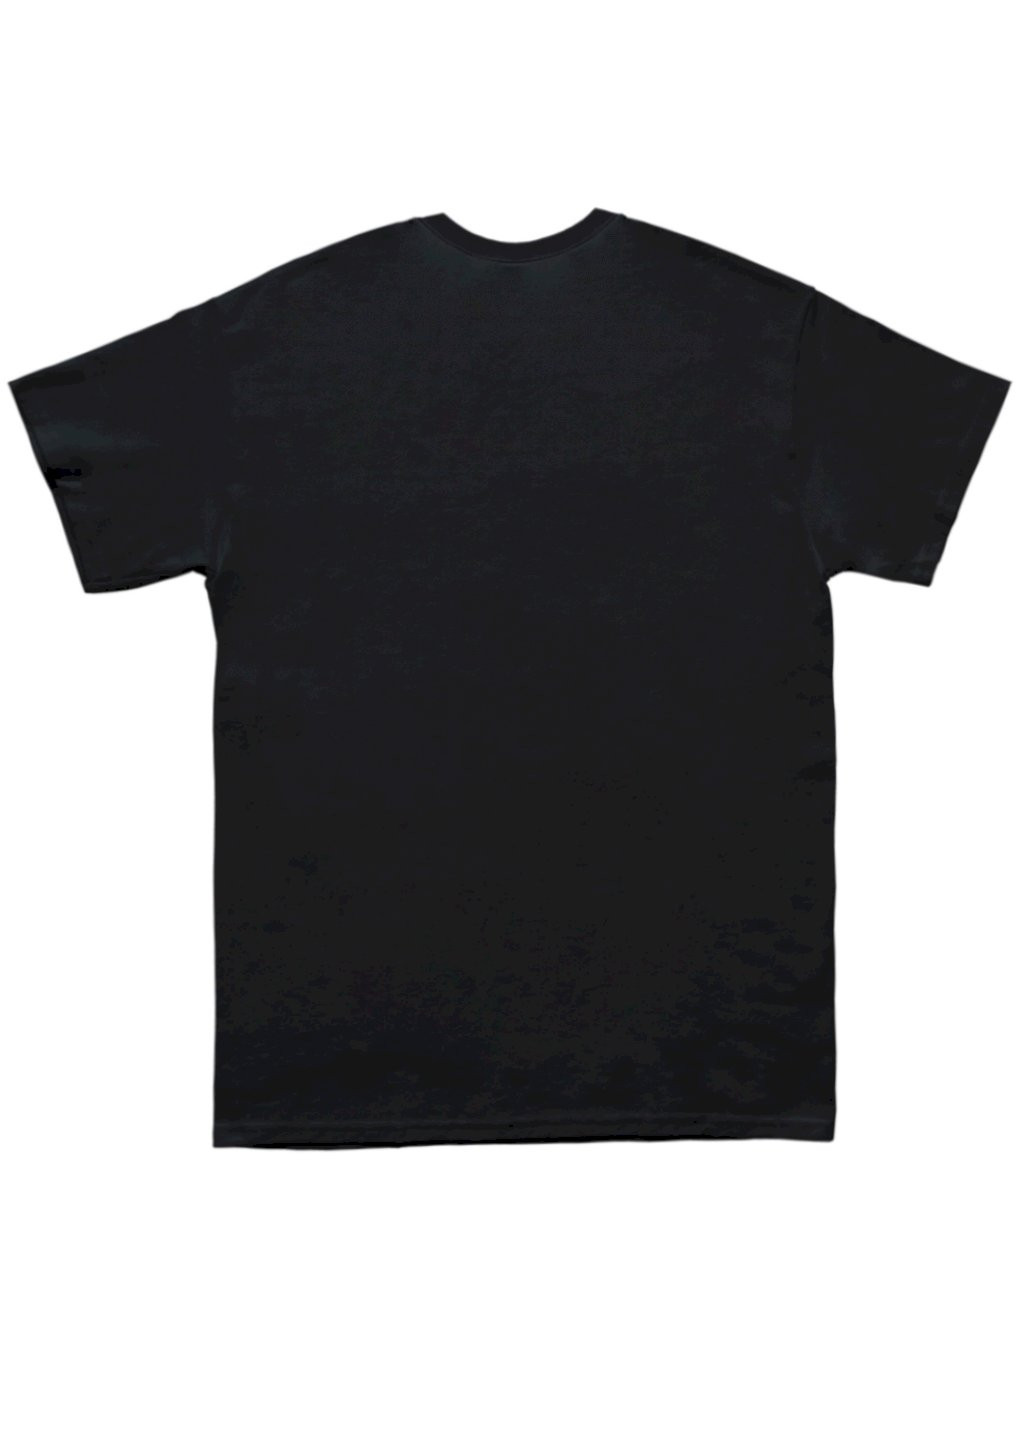 Черная футболка мужская черная "space inside" Trace of Space